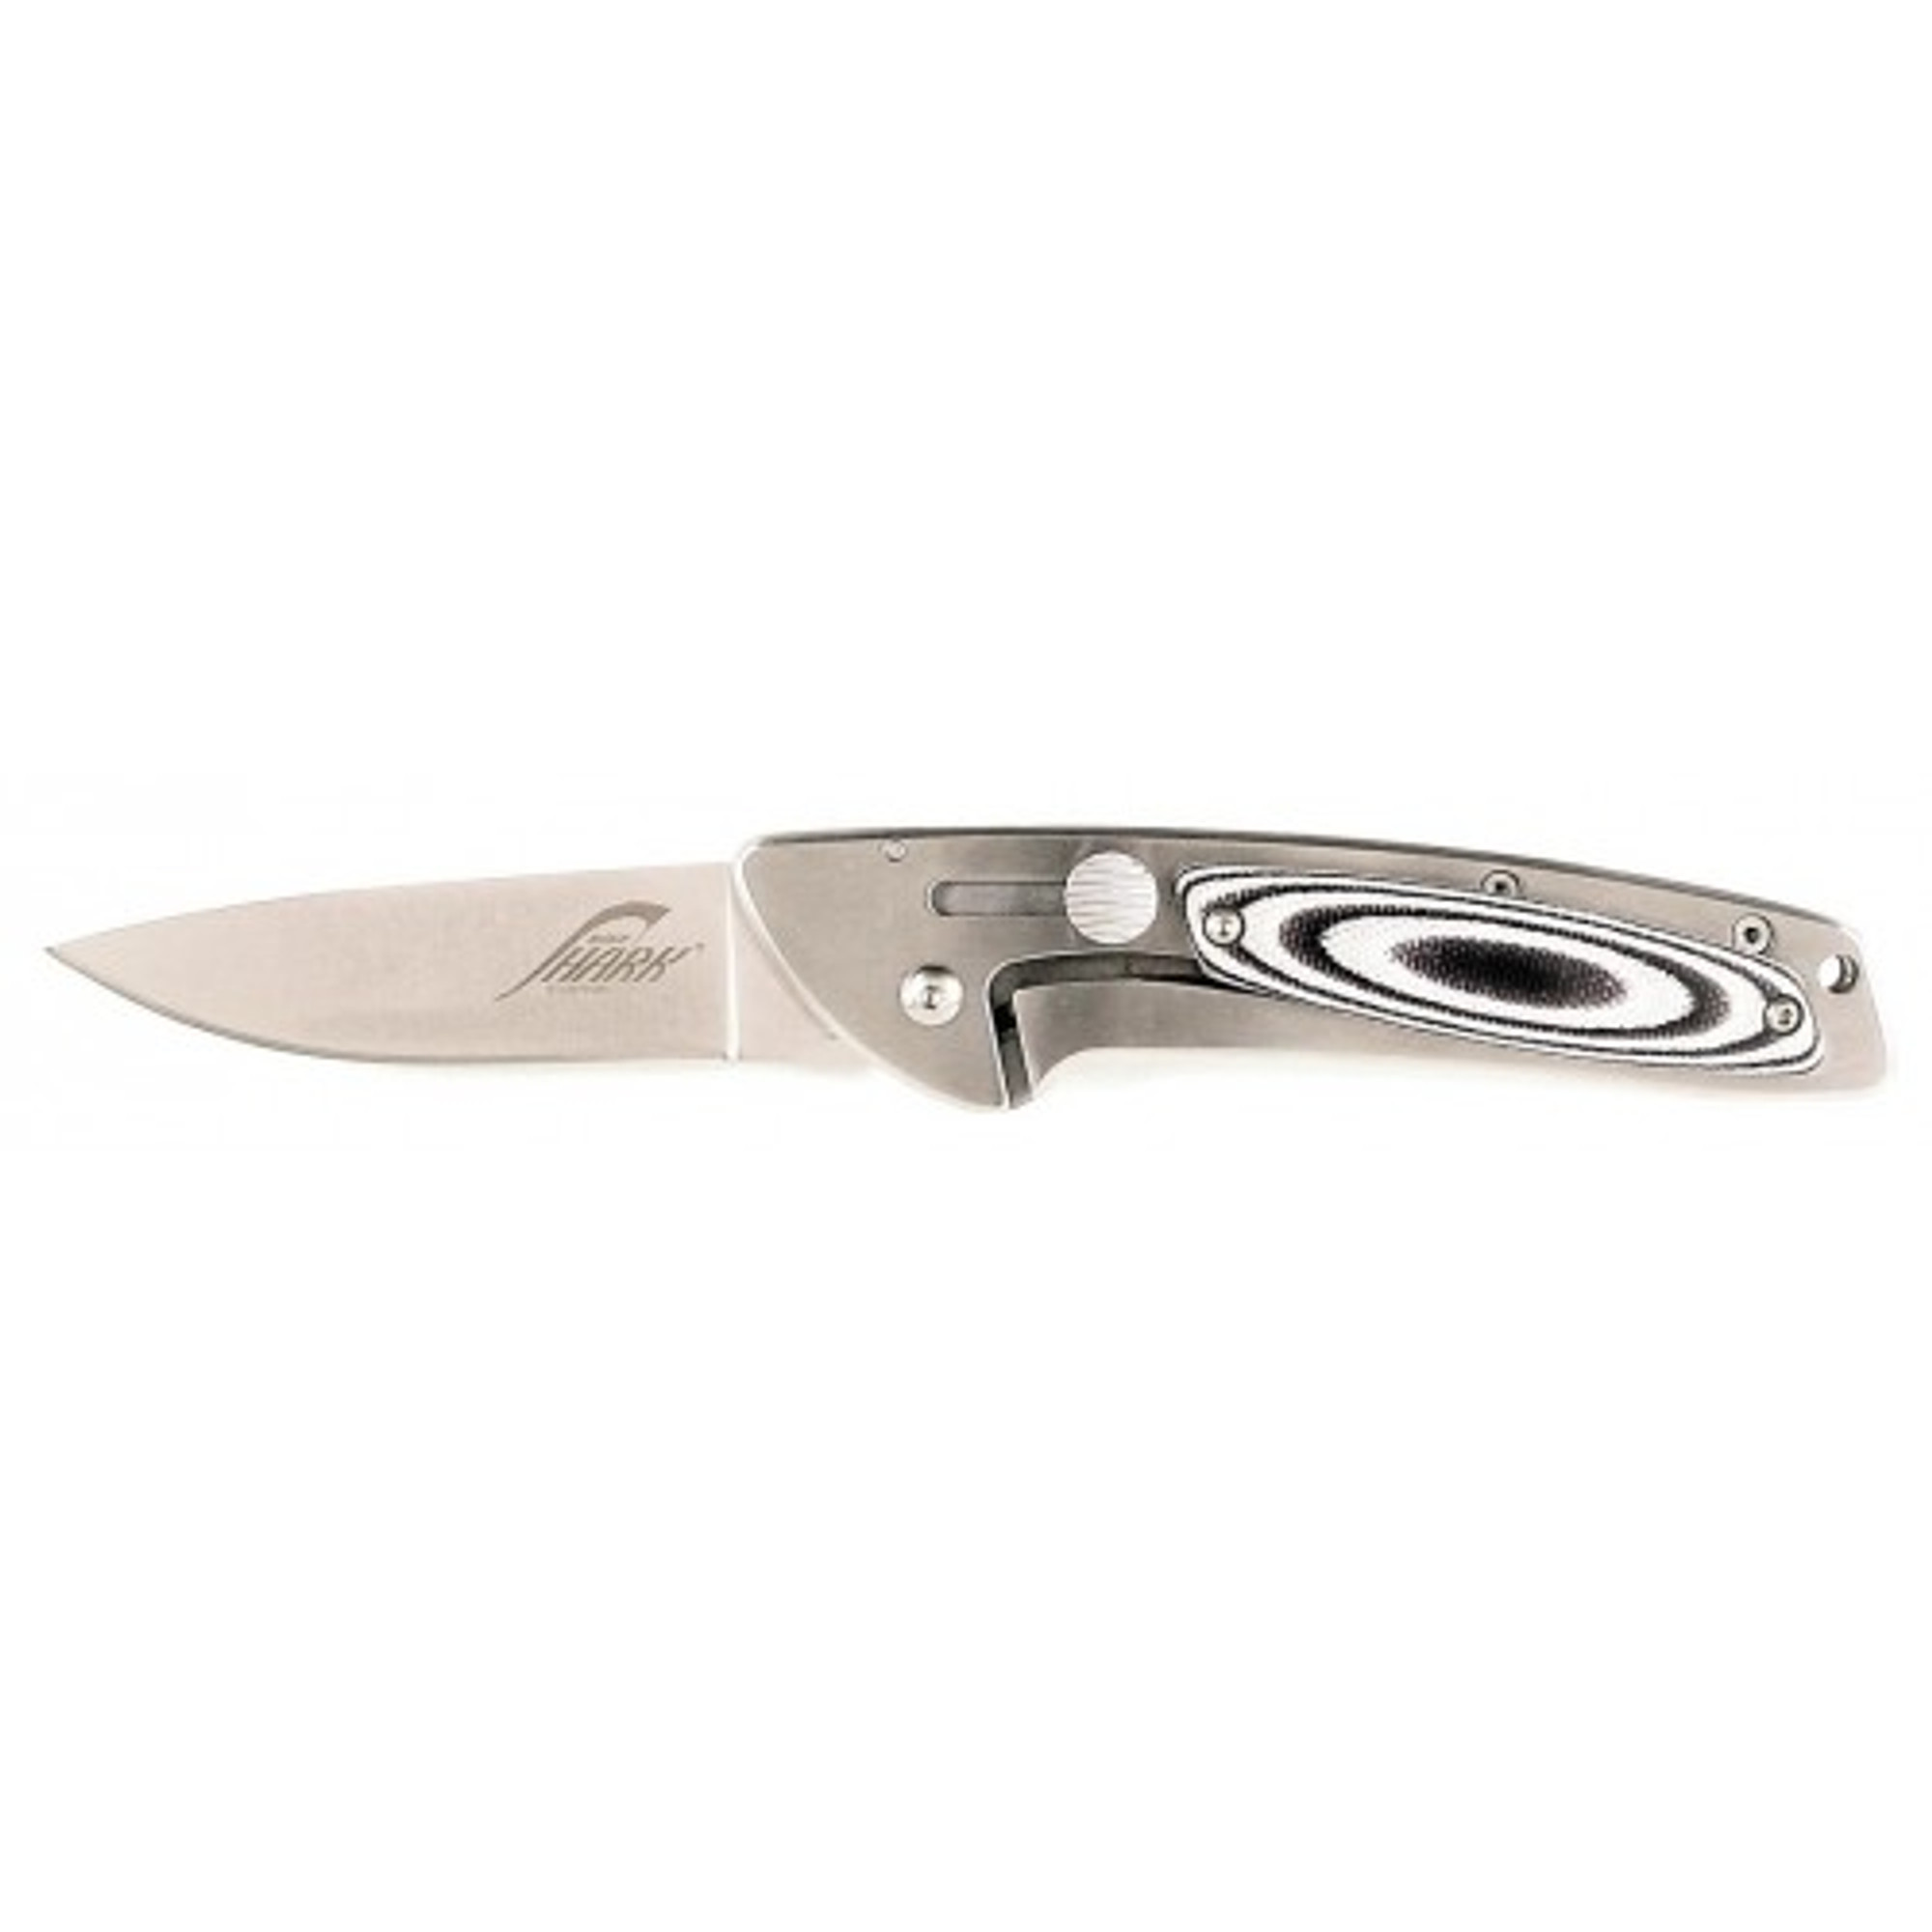 RUKO RUK0085, 440A, 3" Lever Action Folding Blade Knife, Grey Linen Micarta Handle